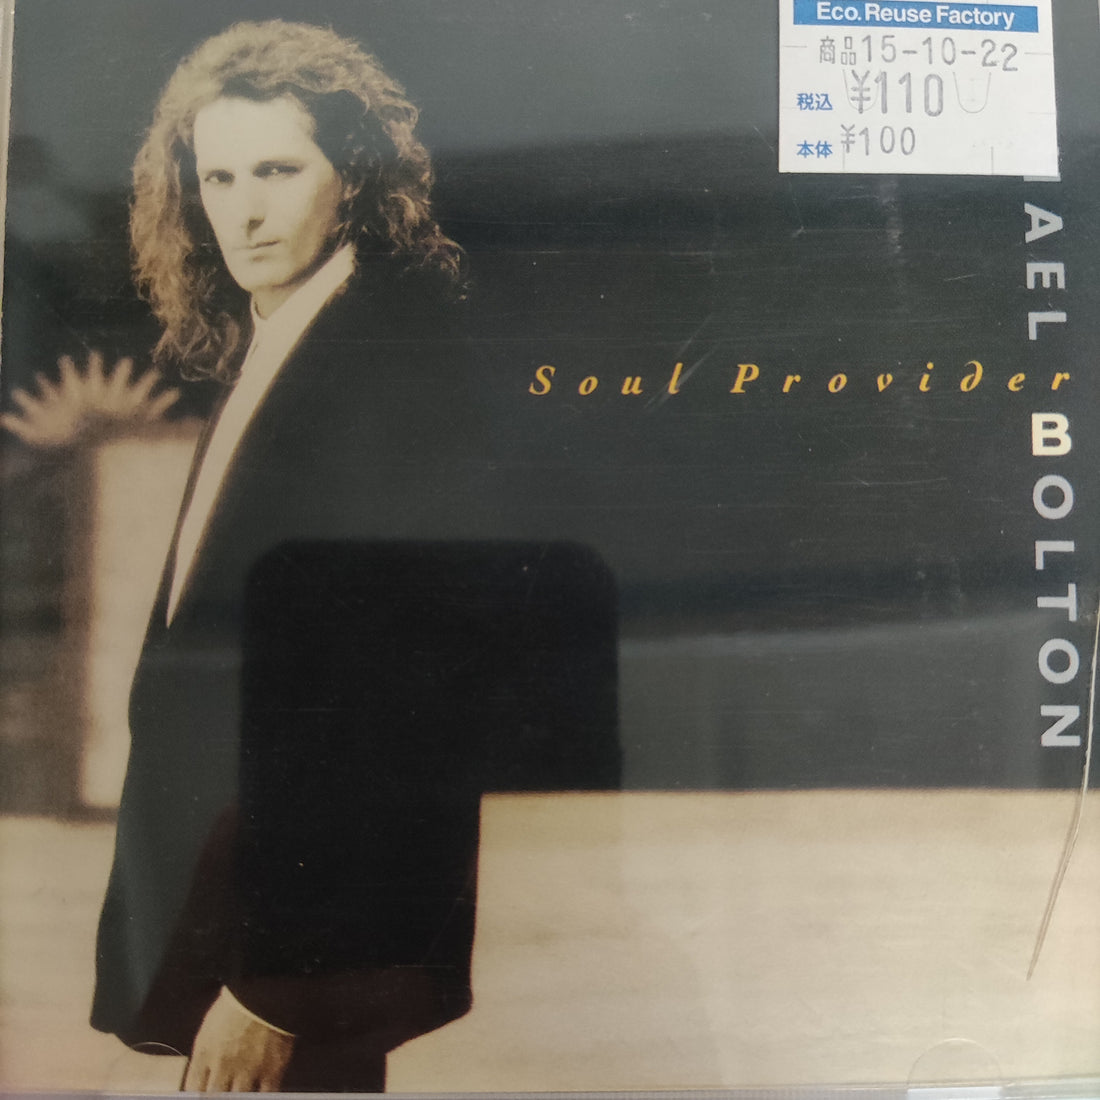 Michael Bolton - Soul Provider (CD) (VG+)